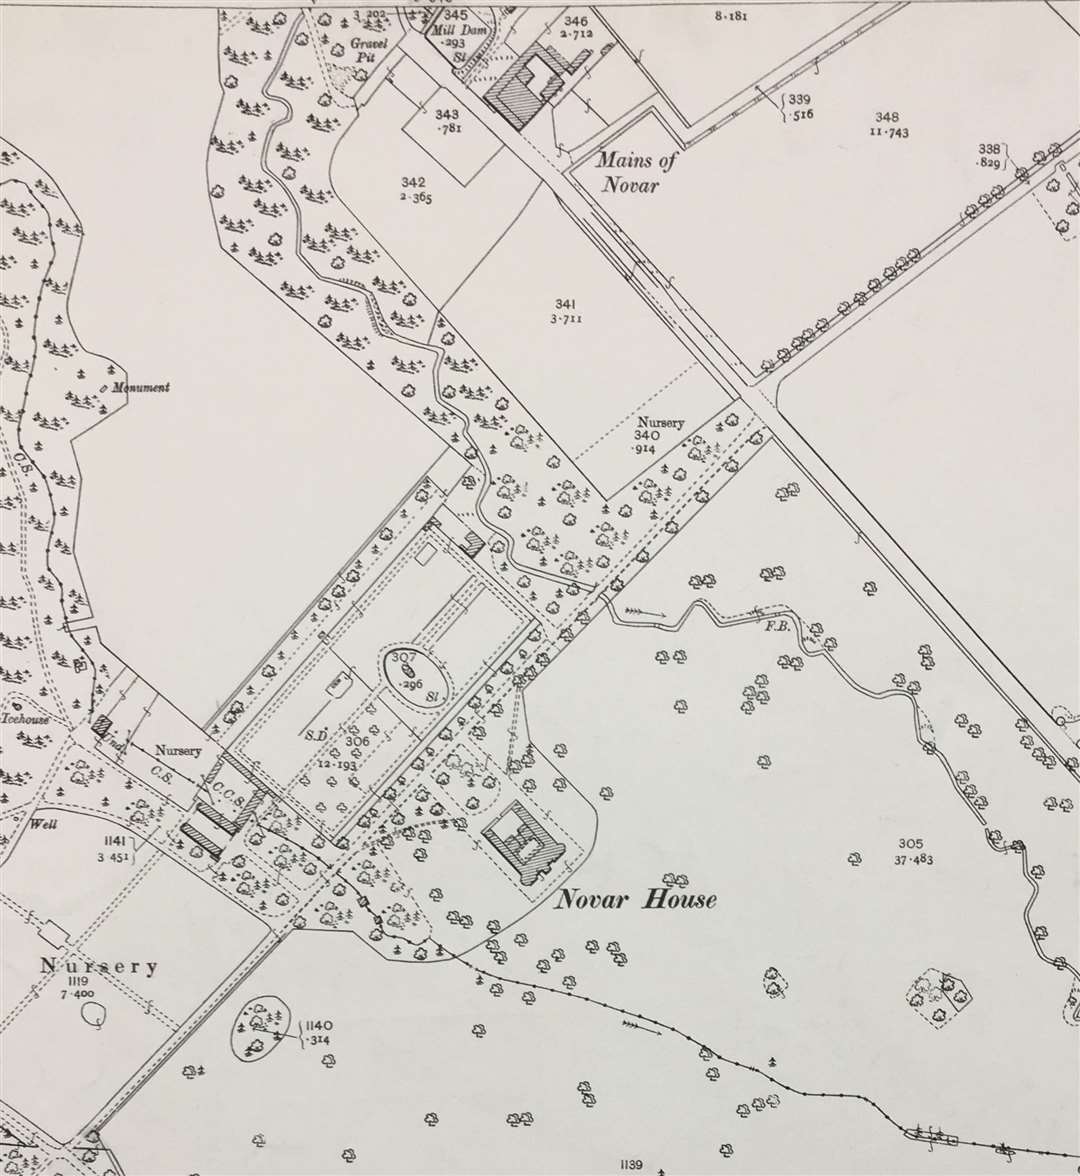 An Ordnance Survey map showing Novar House, sheet LXV.10, 1906.